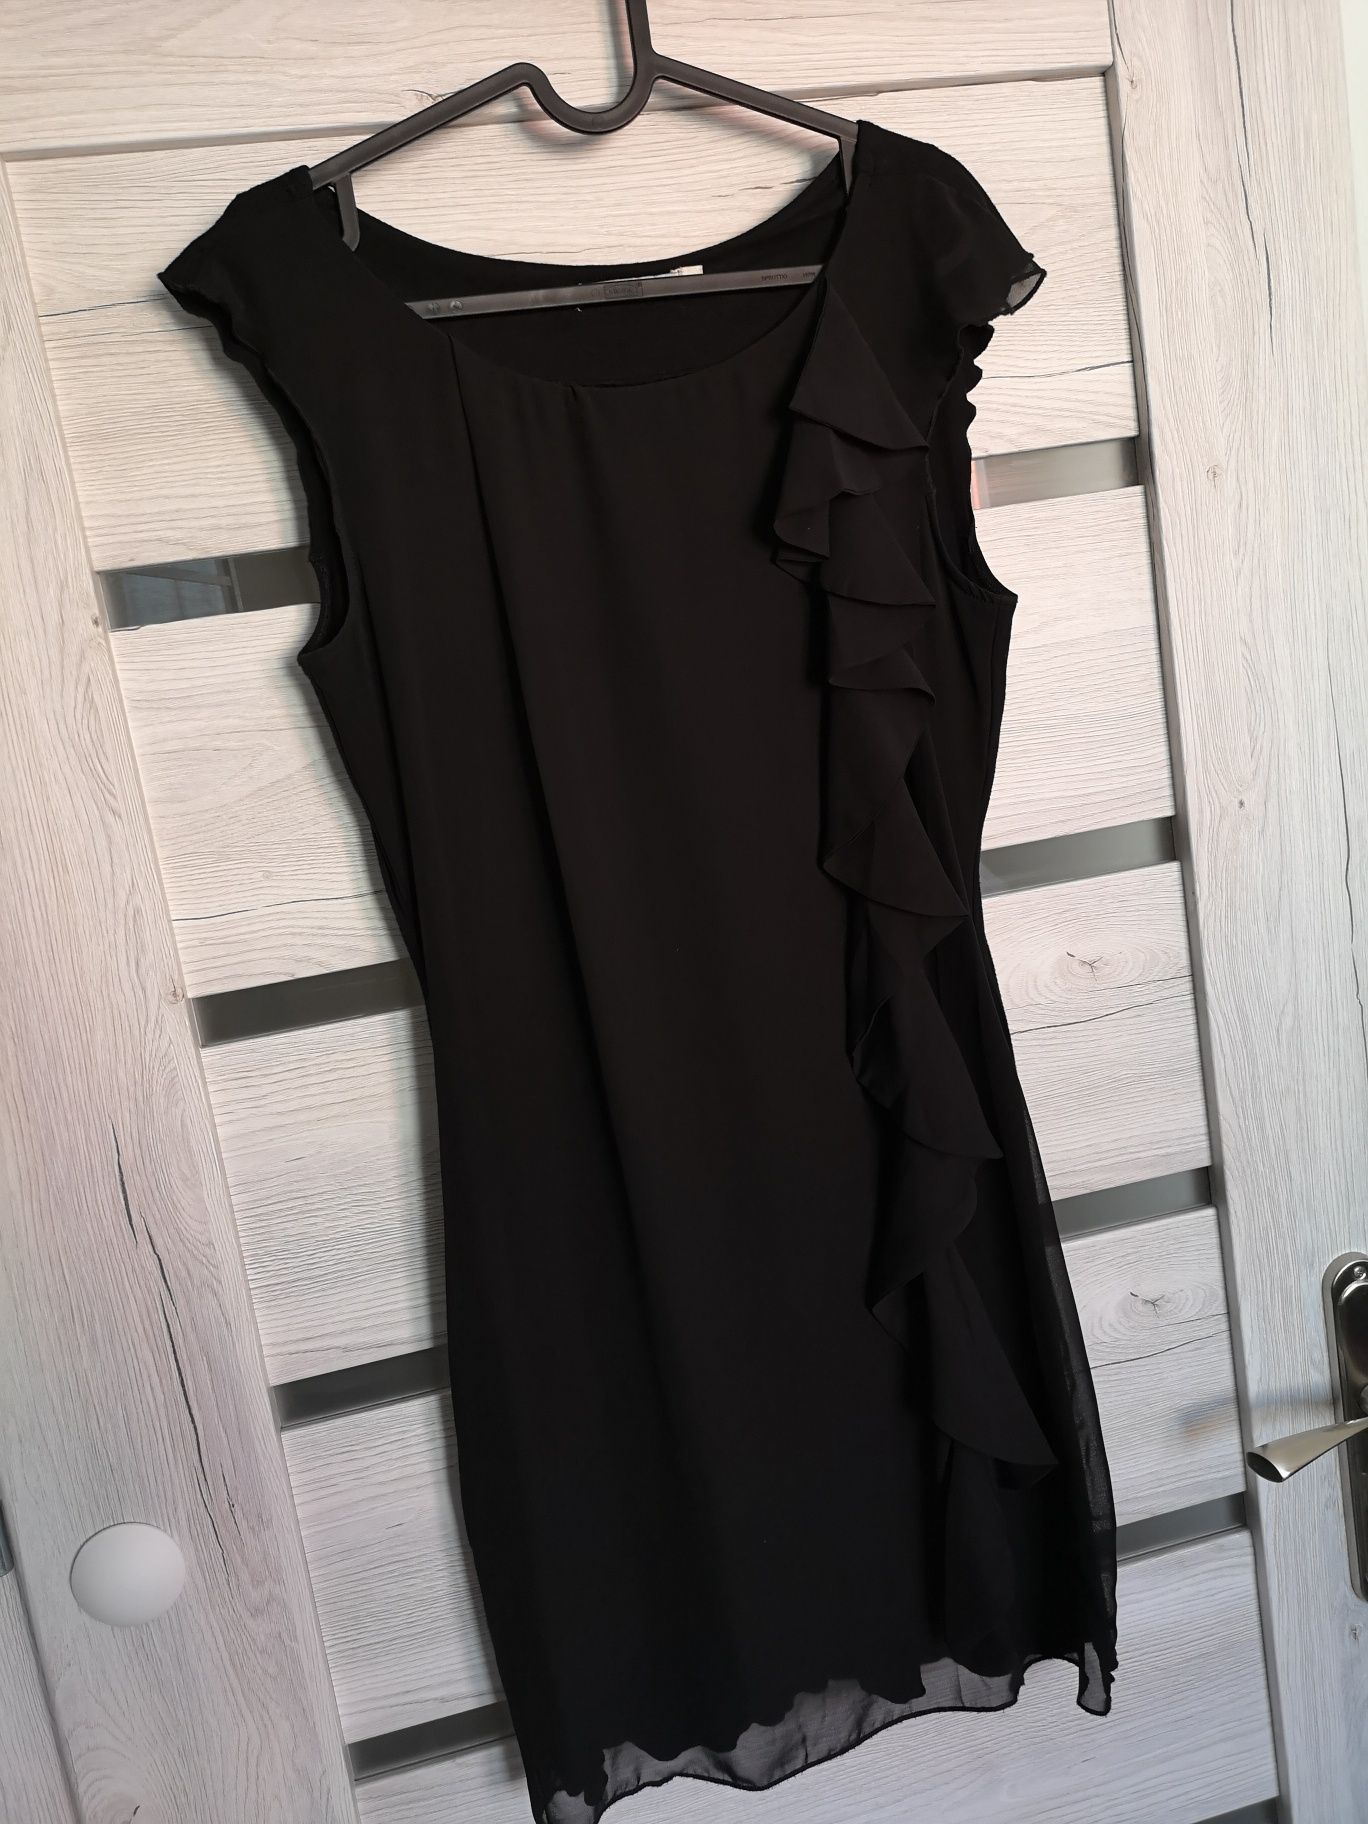 Quiosque mała czarna sukienka koktajlowa wesele sylwester